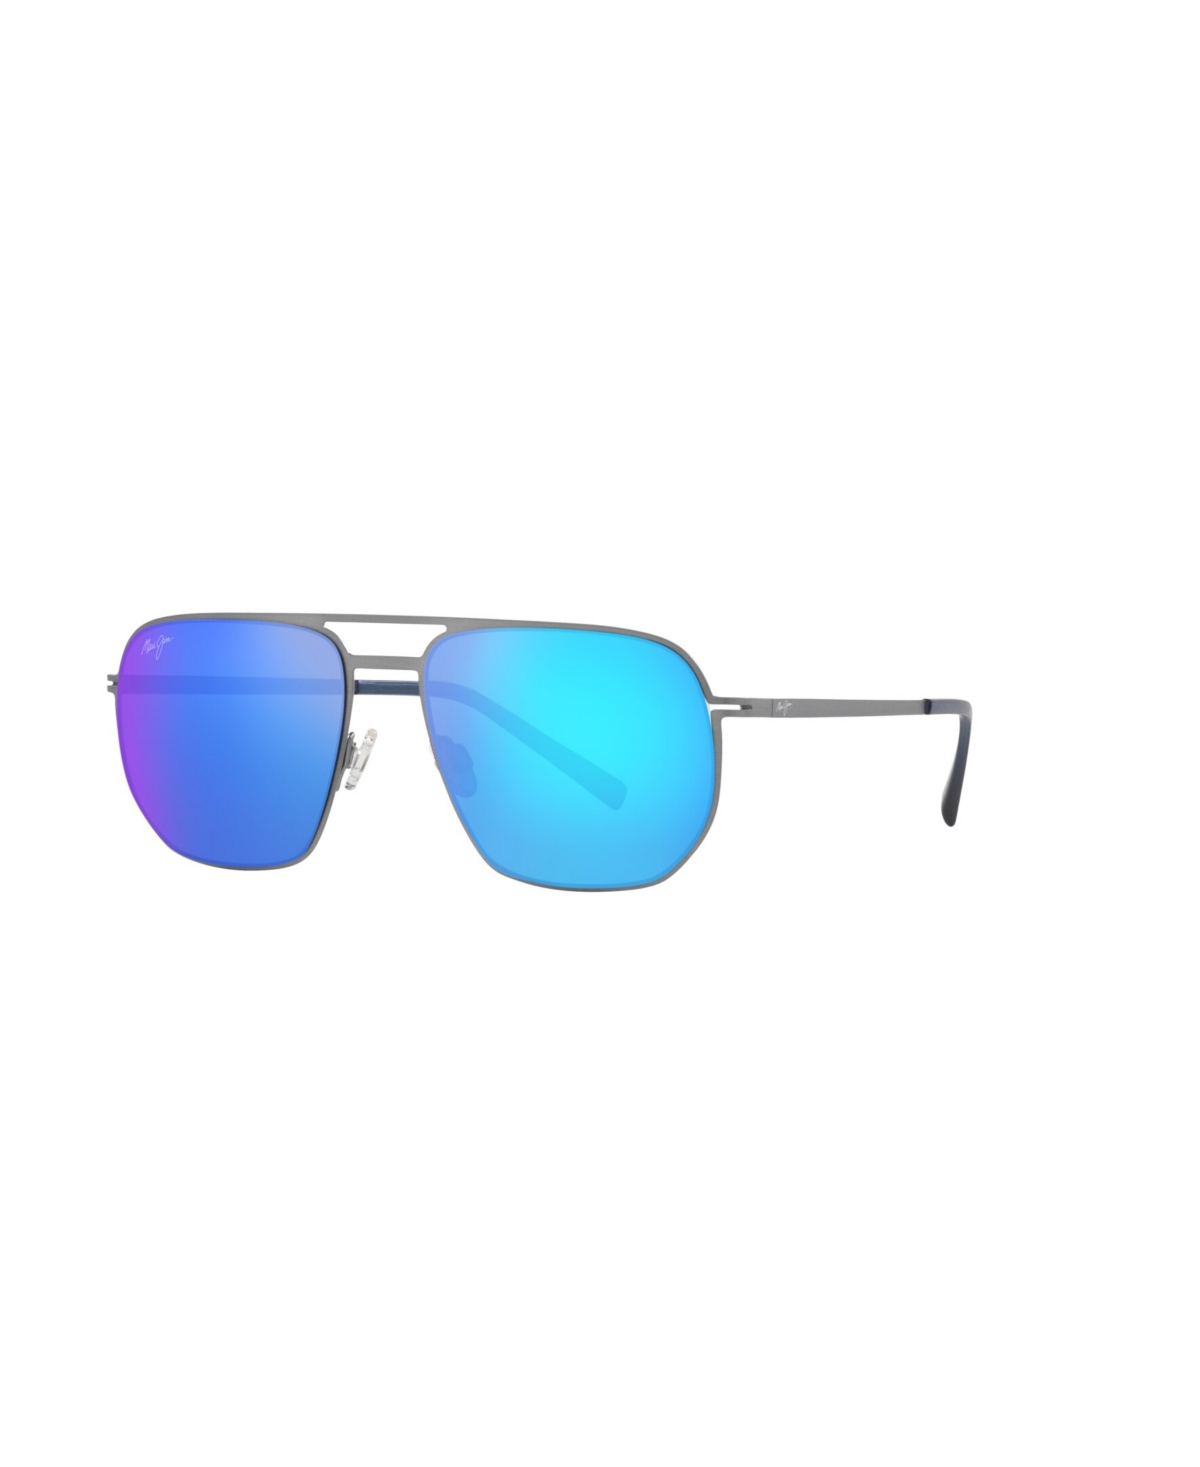 Men's and Women's Polarized Sunglasses, Sharks Cove - Grey Blue